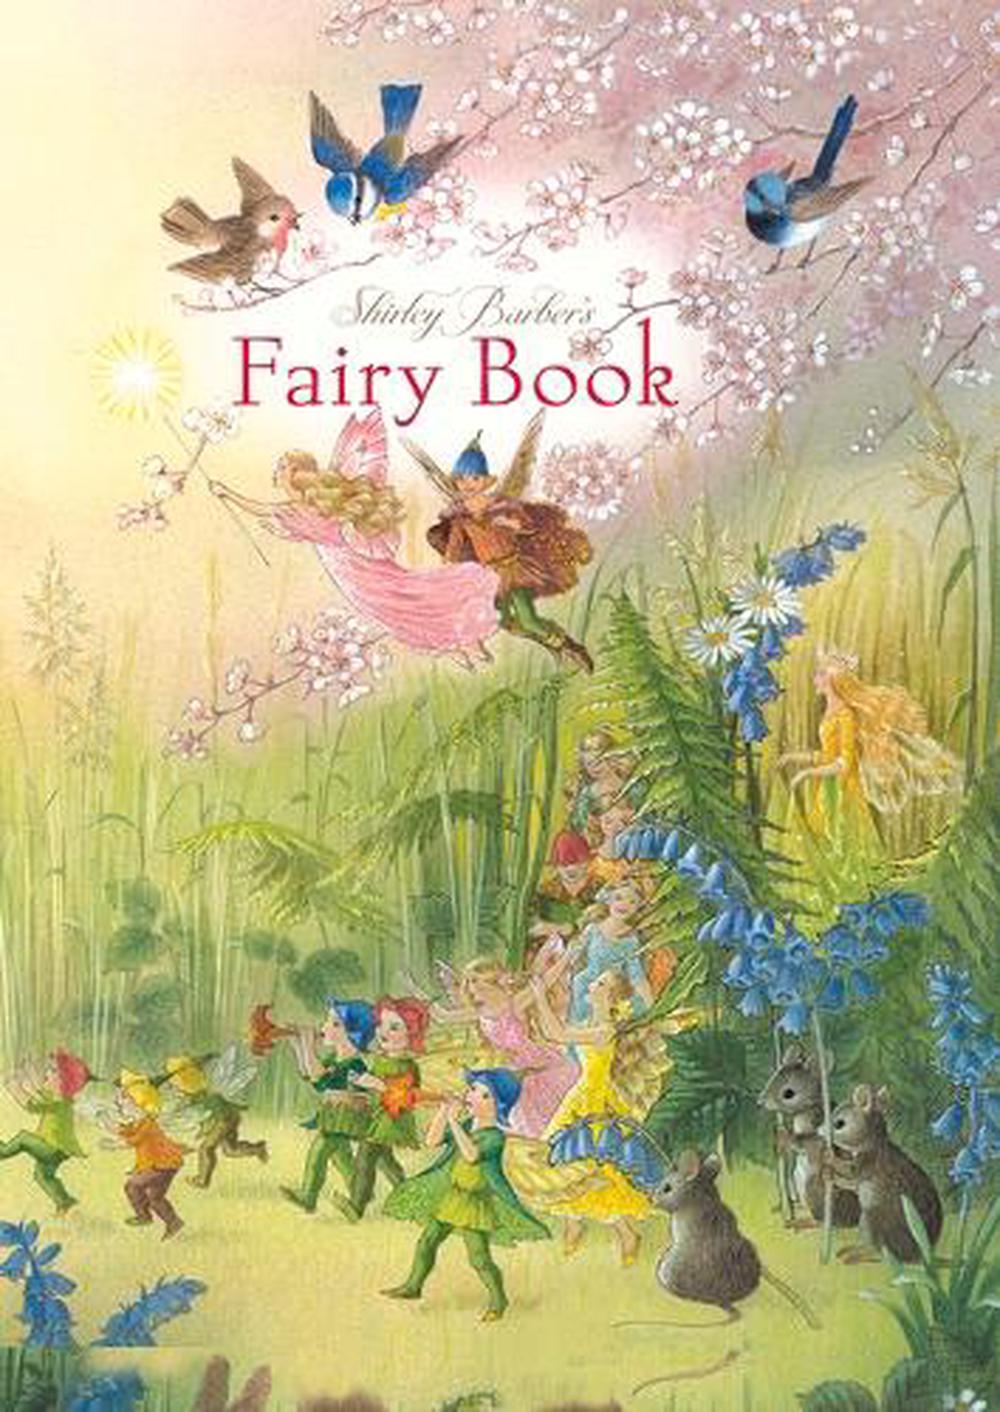 Shirley Barber's Fairy Book (lenticular ed)